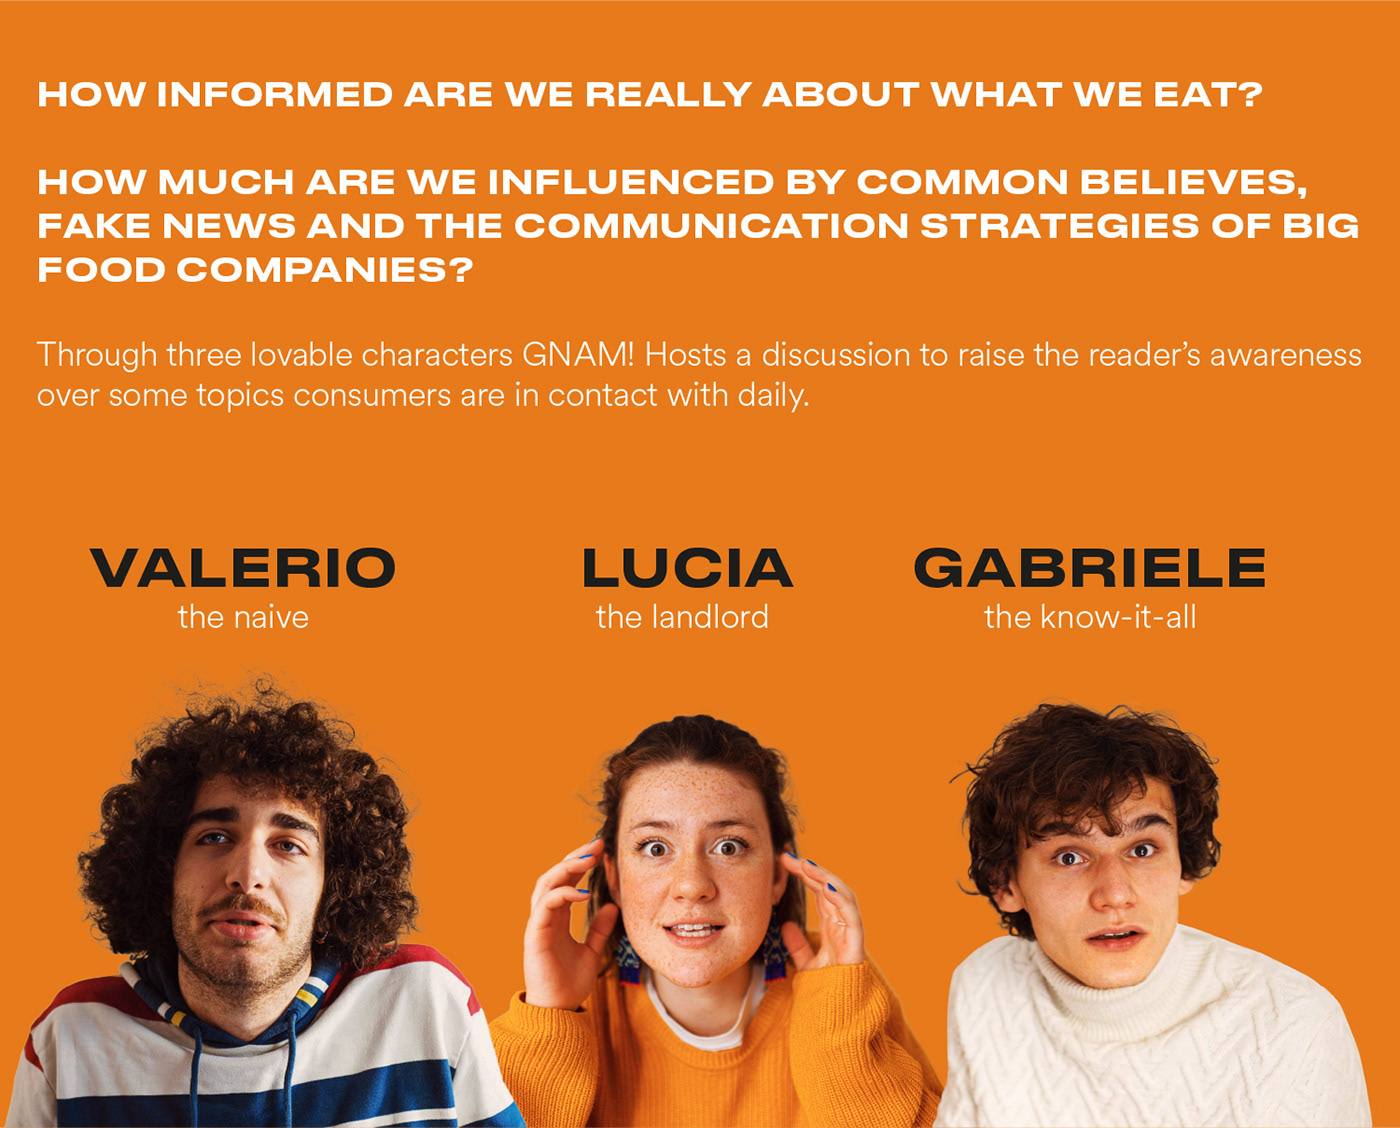 Food  Eating Habits fake news Comic Book onomatopoeia diet Health Communication Strategies Gnam Photo Comic